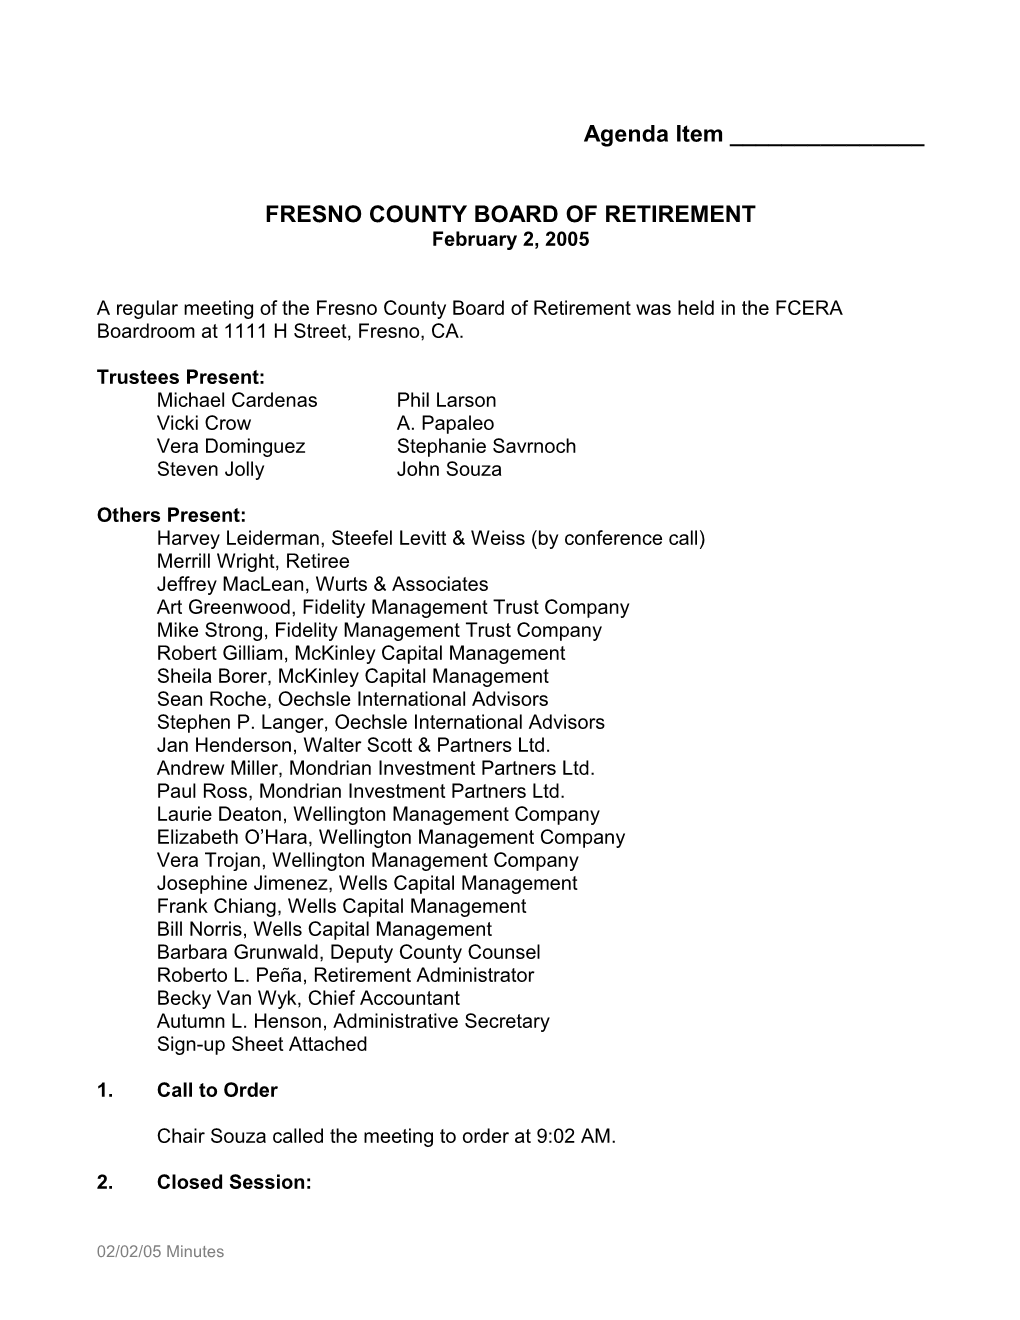 Fresno County Board of Retirement